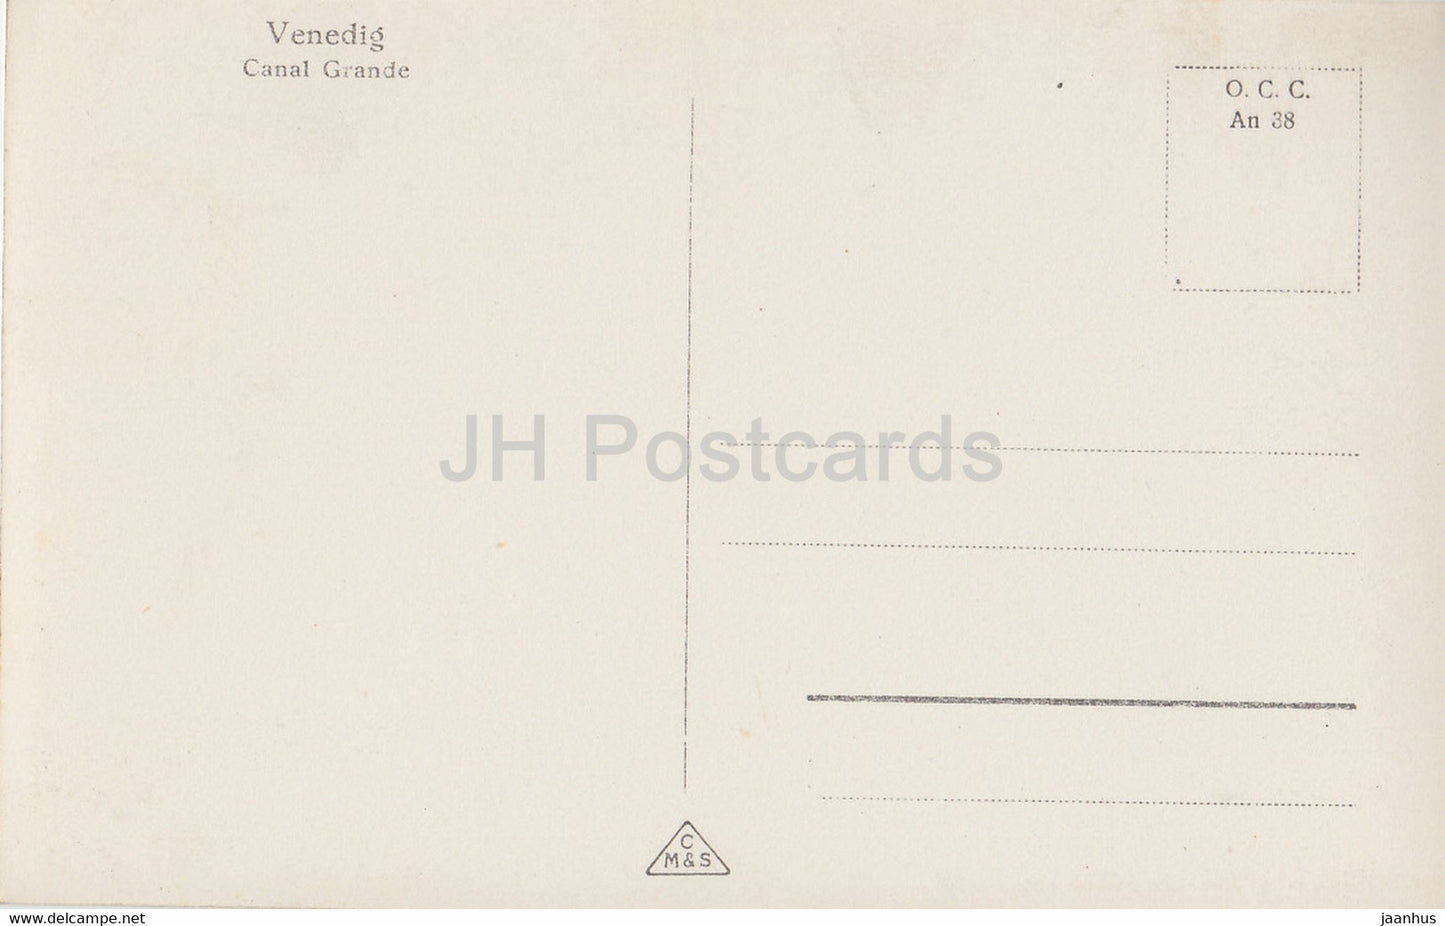 Venezia - Vendig - Venedig - Canal Grande - 644 - alte Postkarte - Italien - unbenutzt